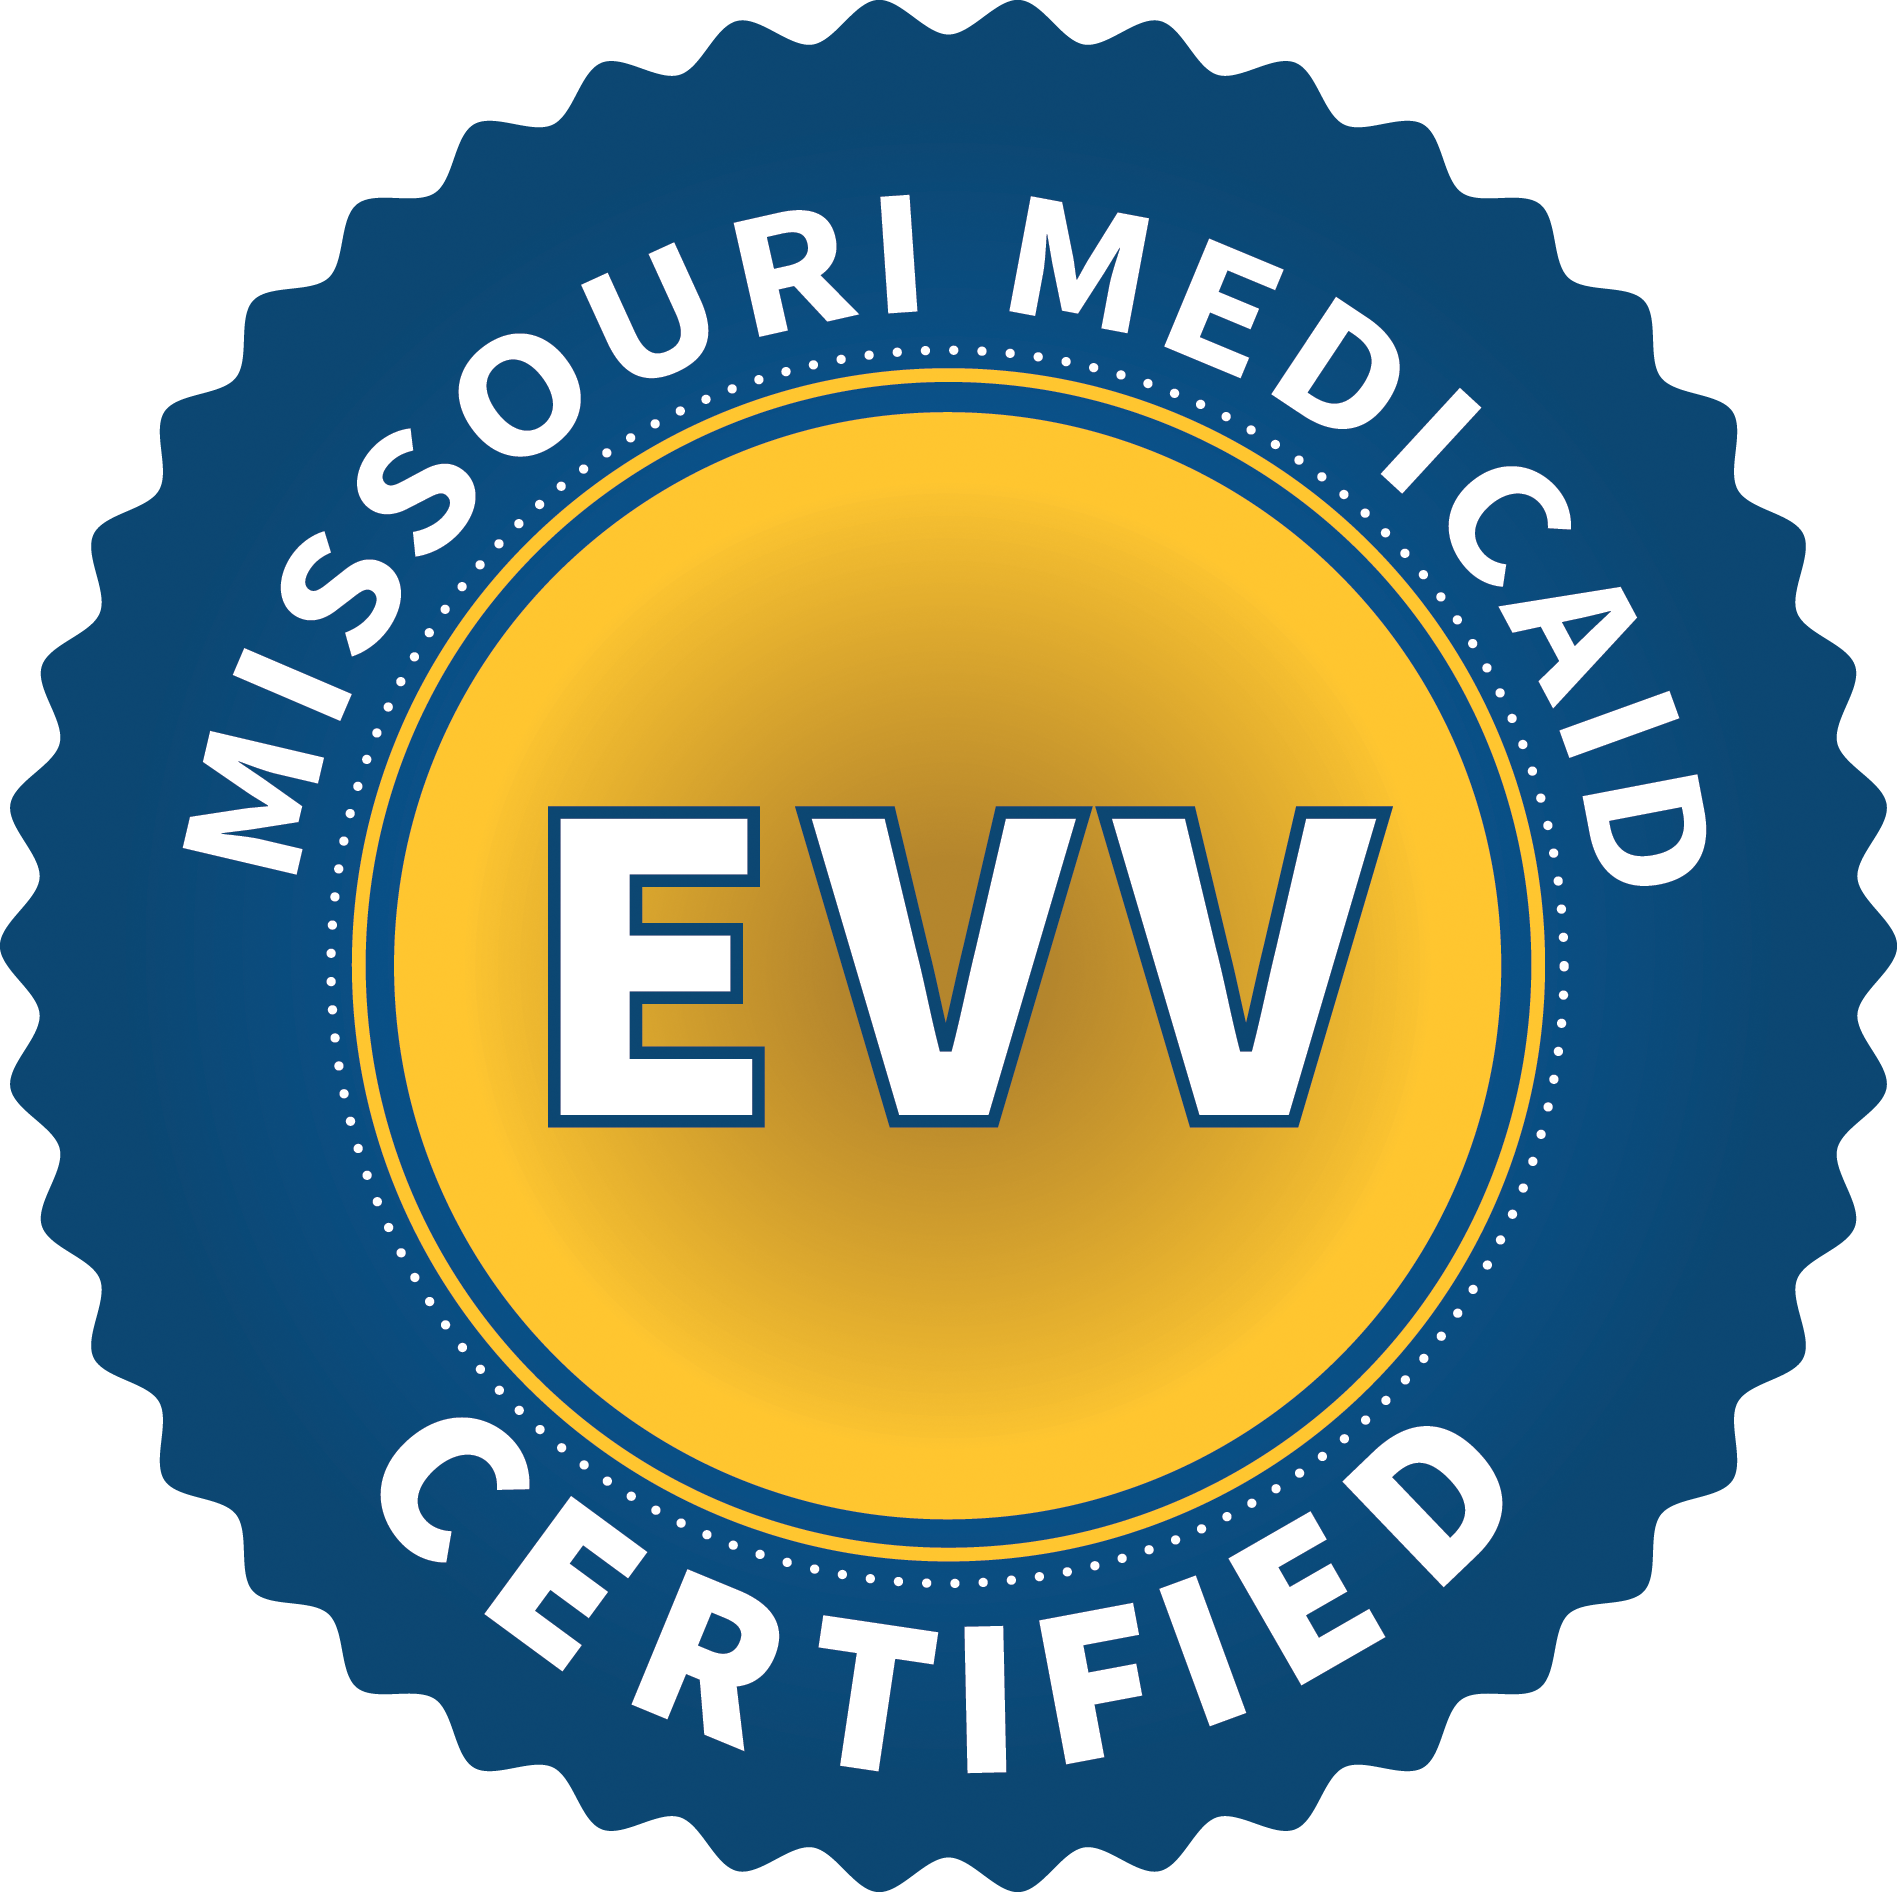 EVV System for Missouri